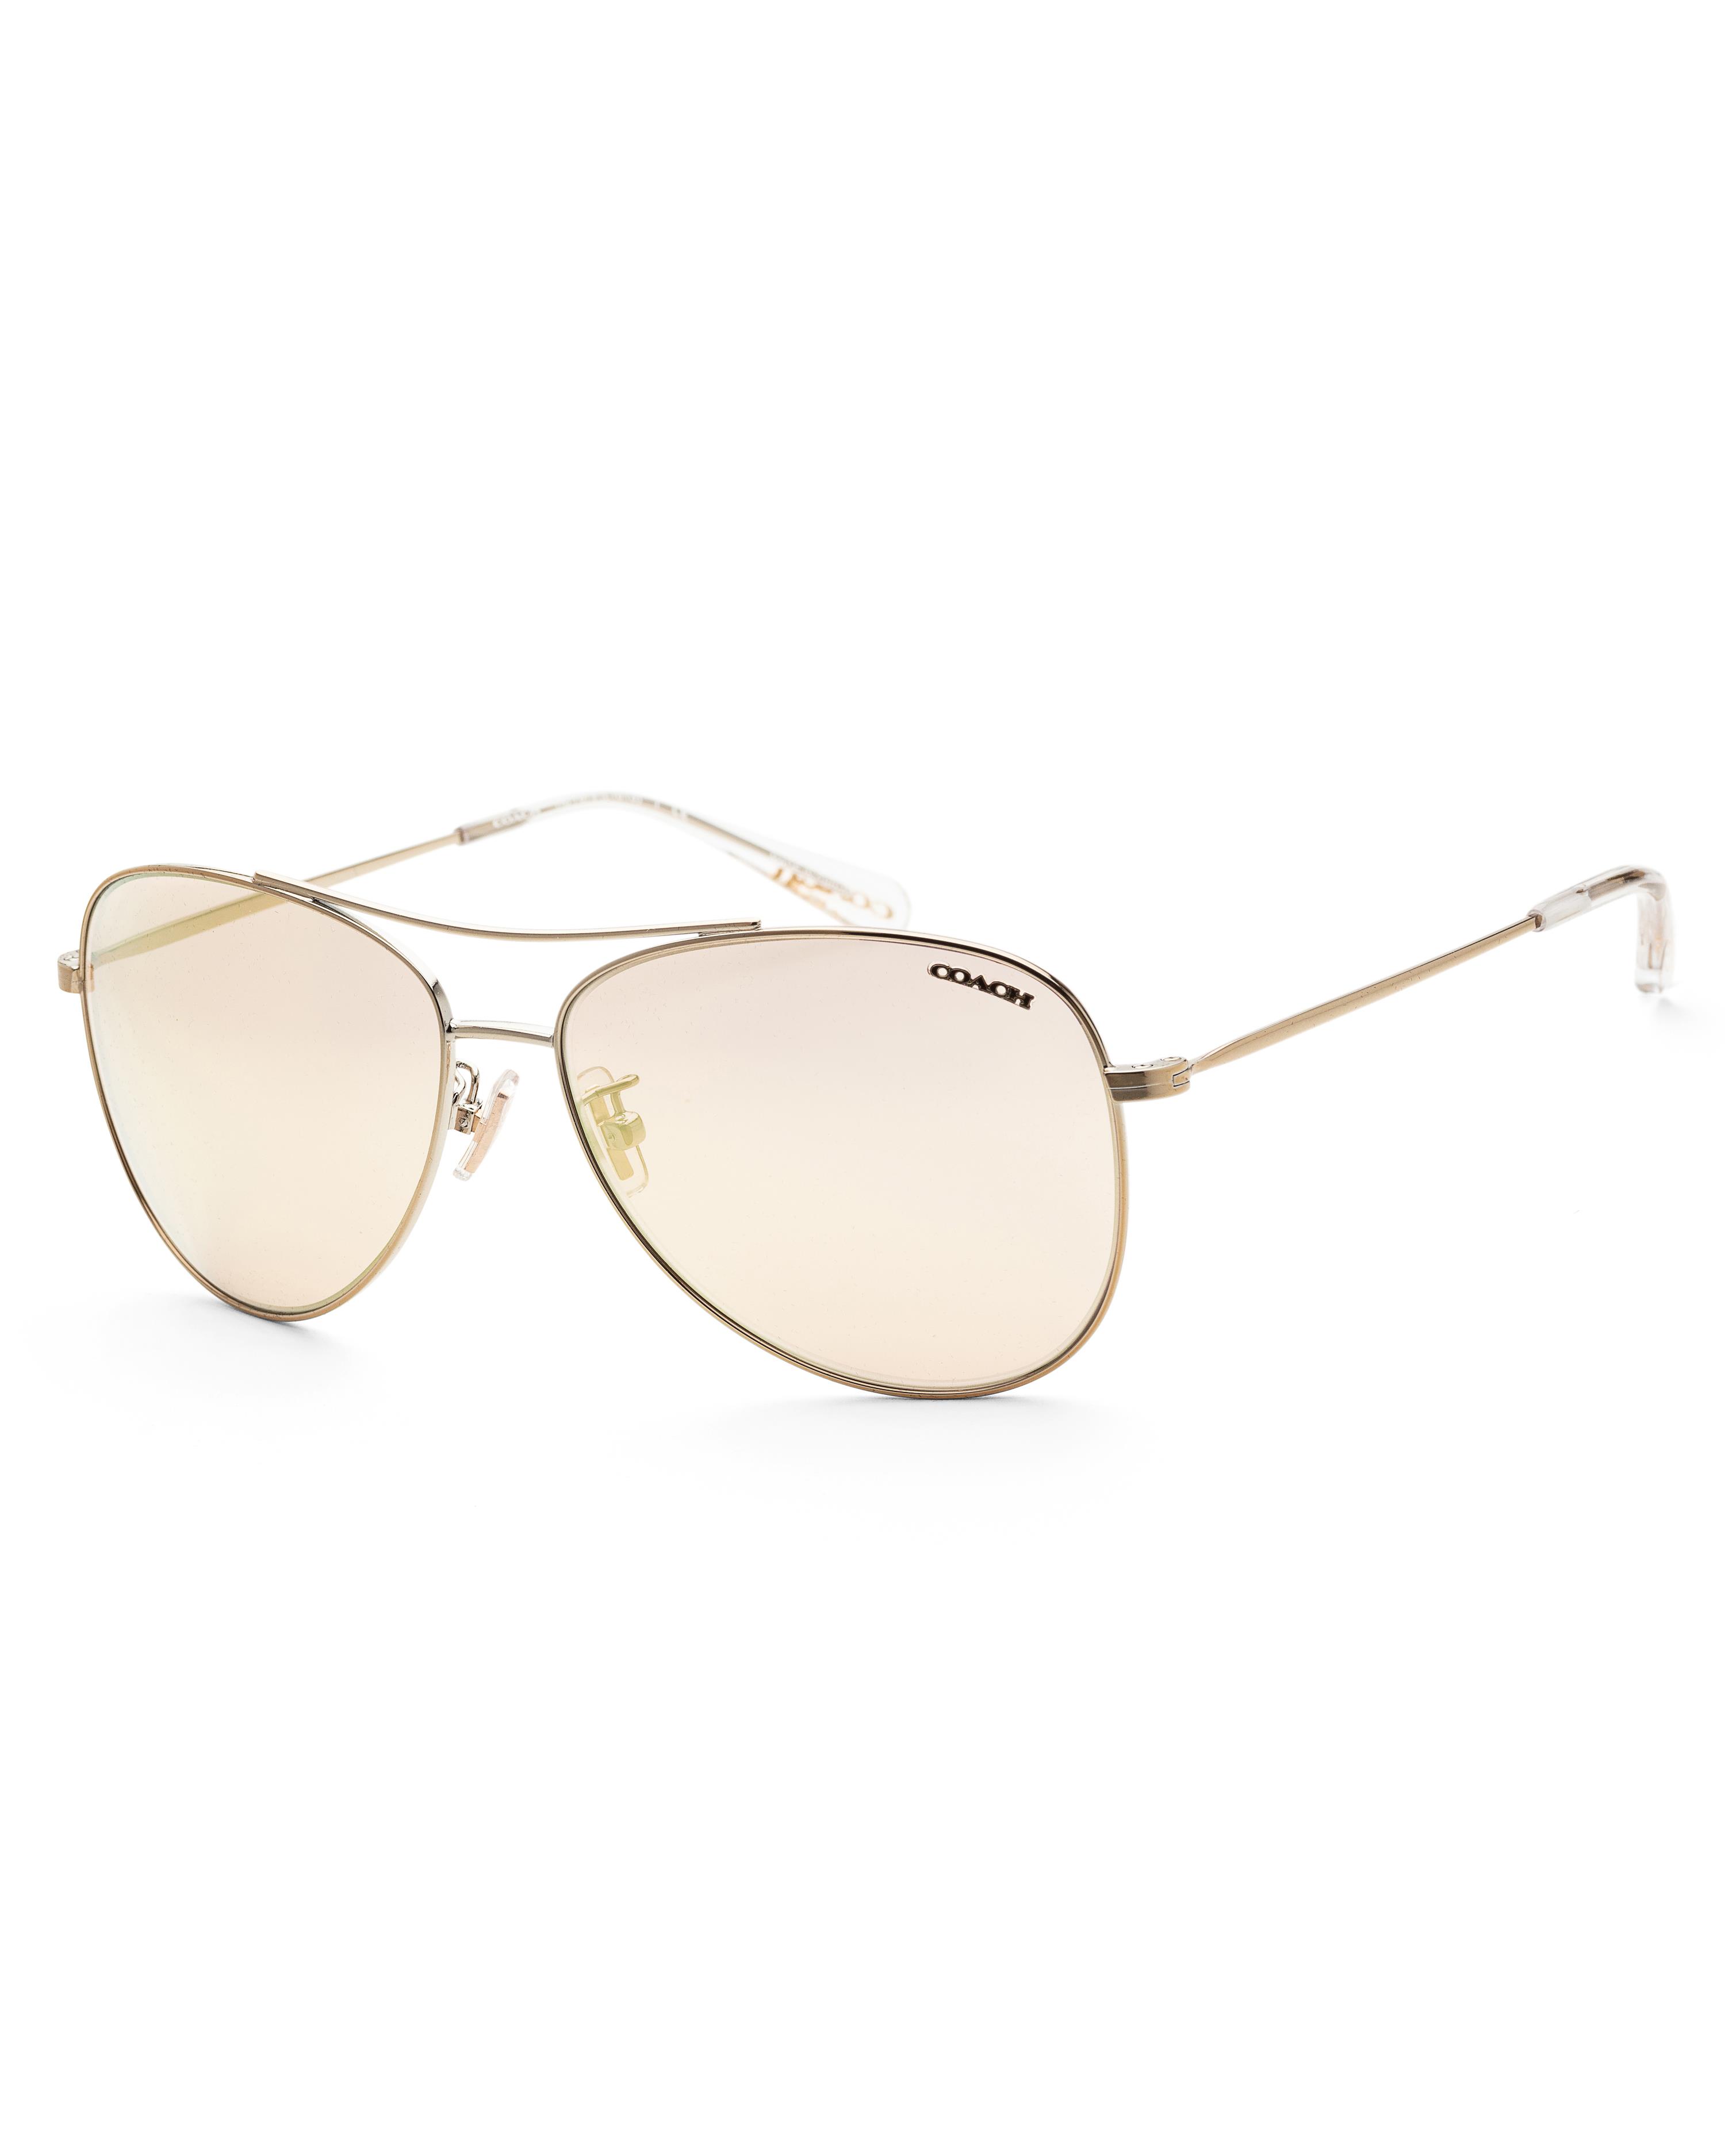 Coach Women's HC7079-90055A-58 Fashion 58mm Shiny Light Gold Sunglasses - image 1 of 3